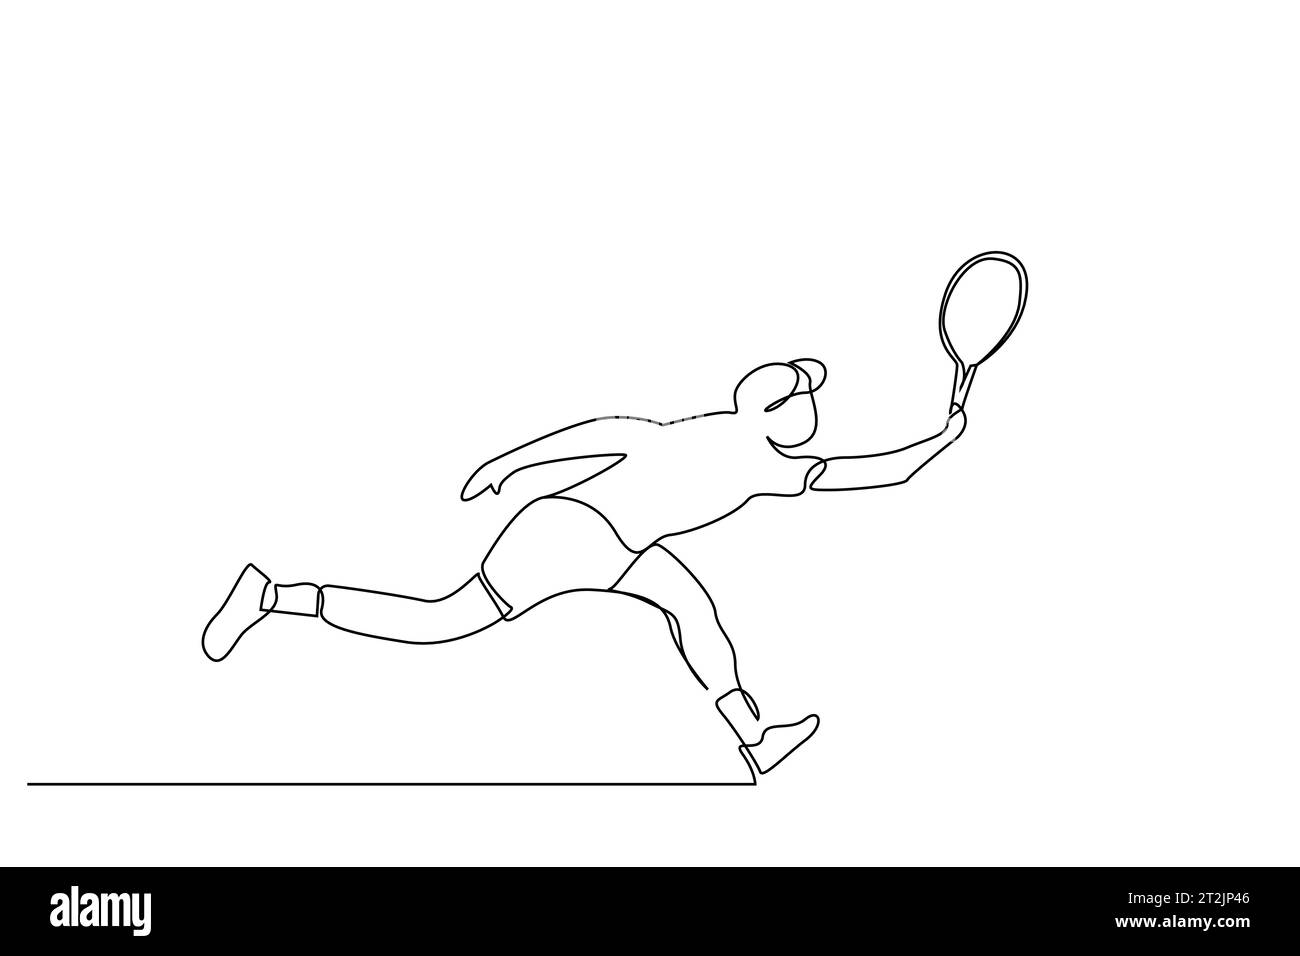 man person tennis badminton racket active lifestyle line art Stock Vector